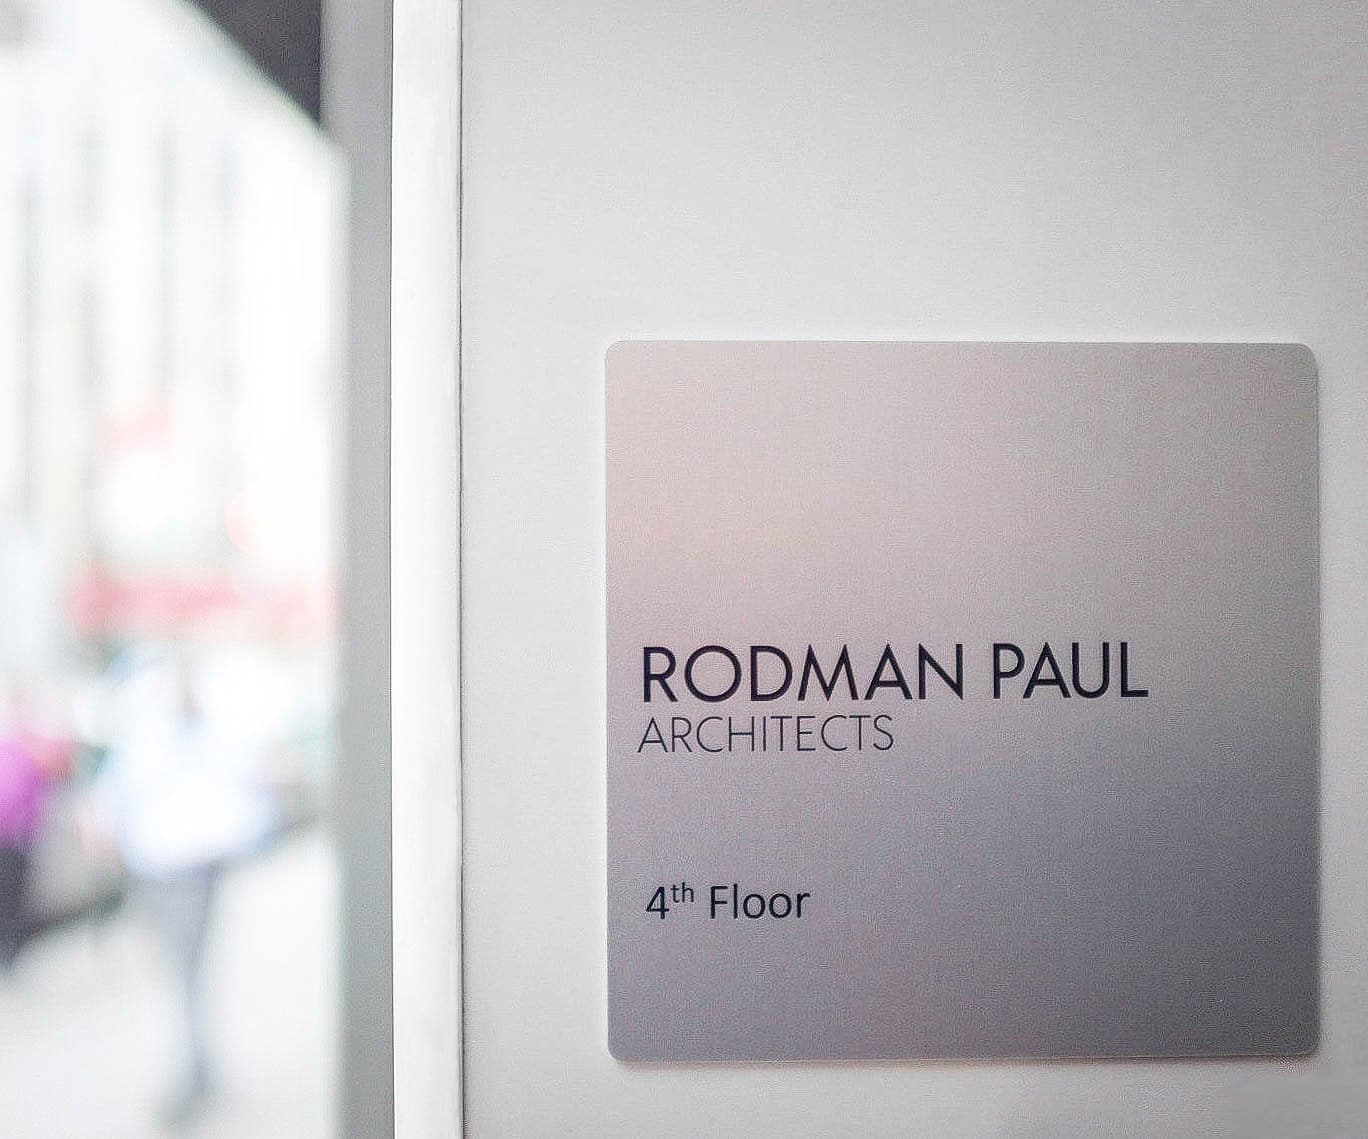 Contact Rodman Paul Architects